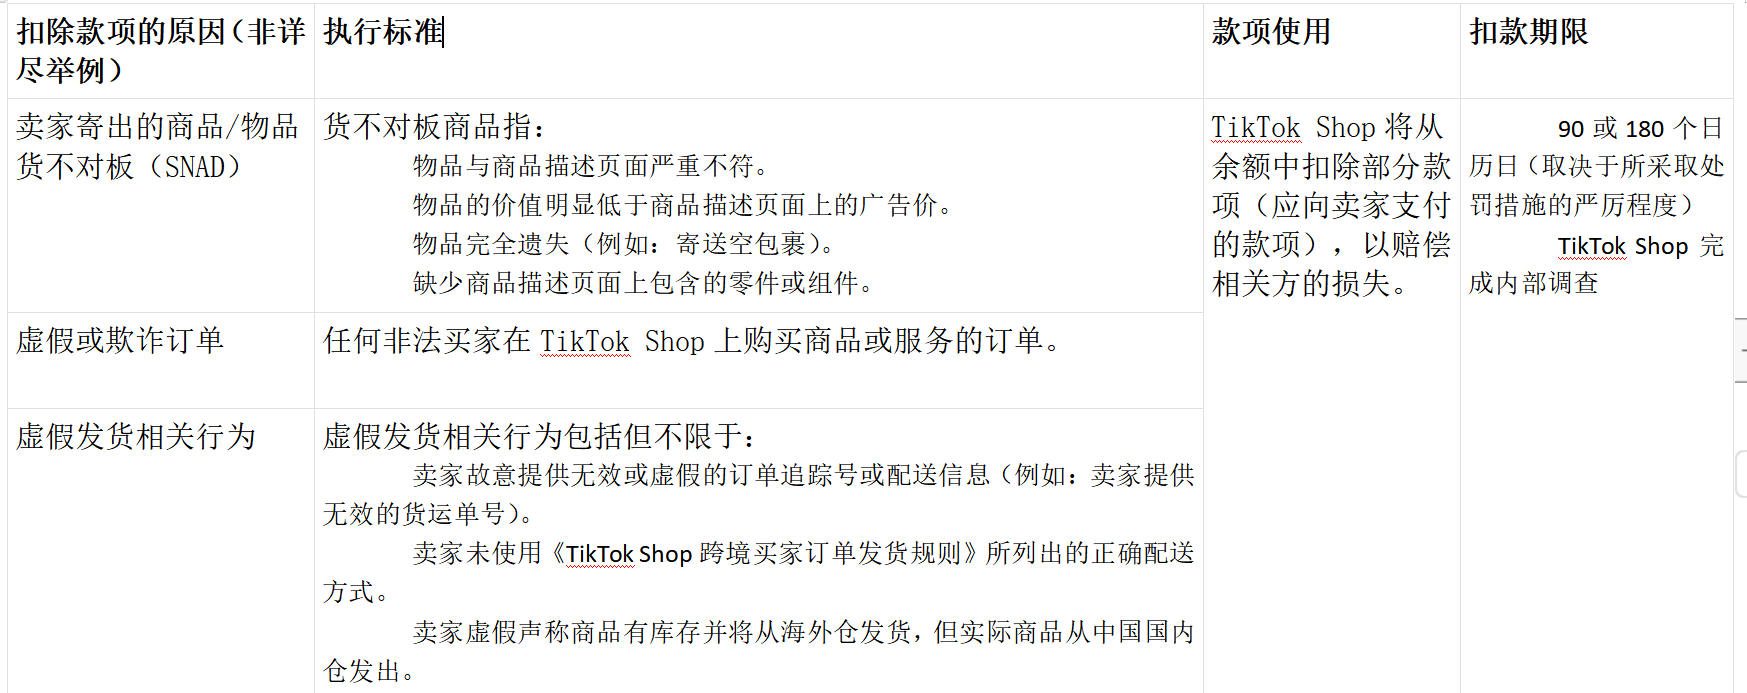 TikTok Shop店铺绩效评估规则大全